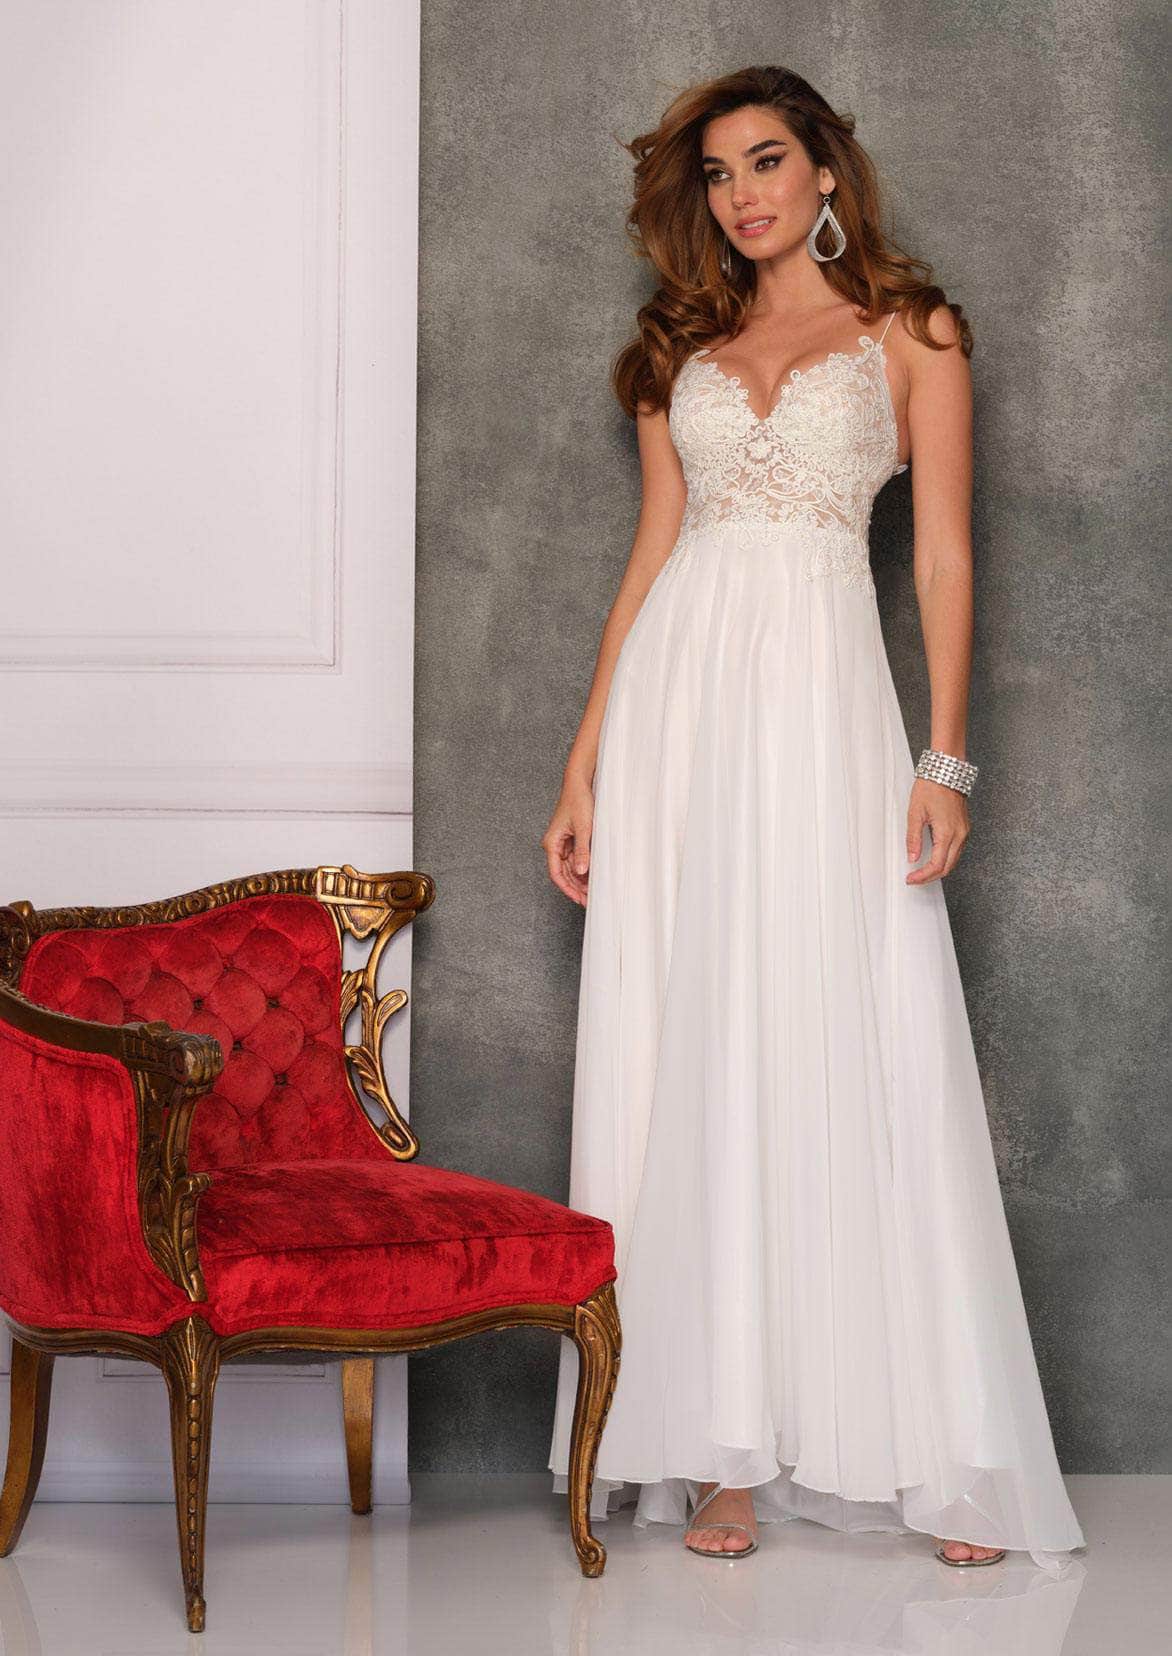 Prom Queen: Spaghetti Straps Long White Dress